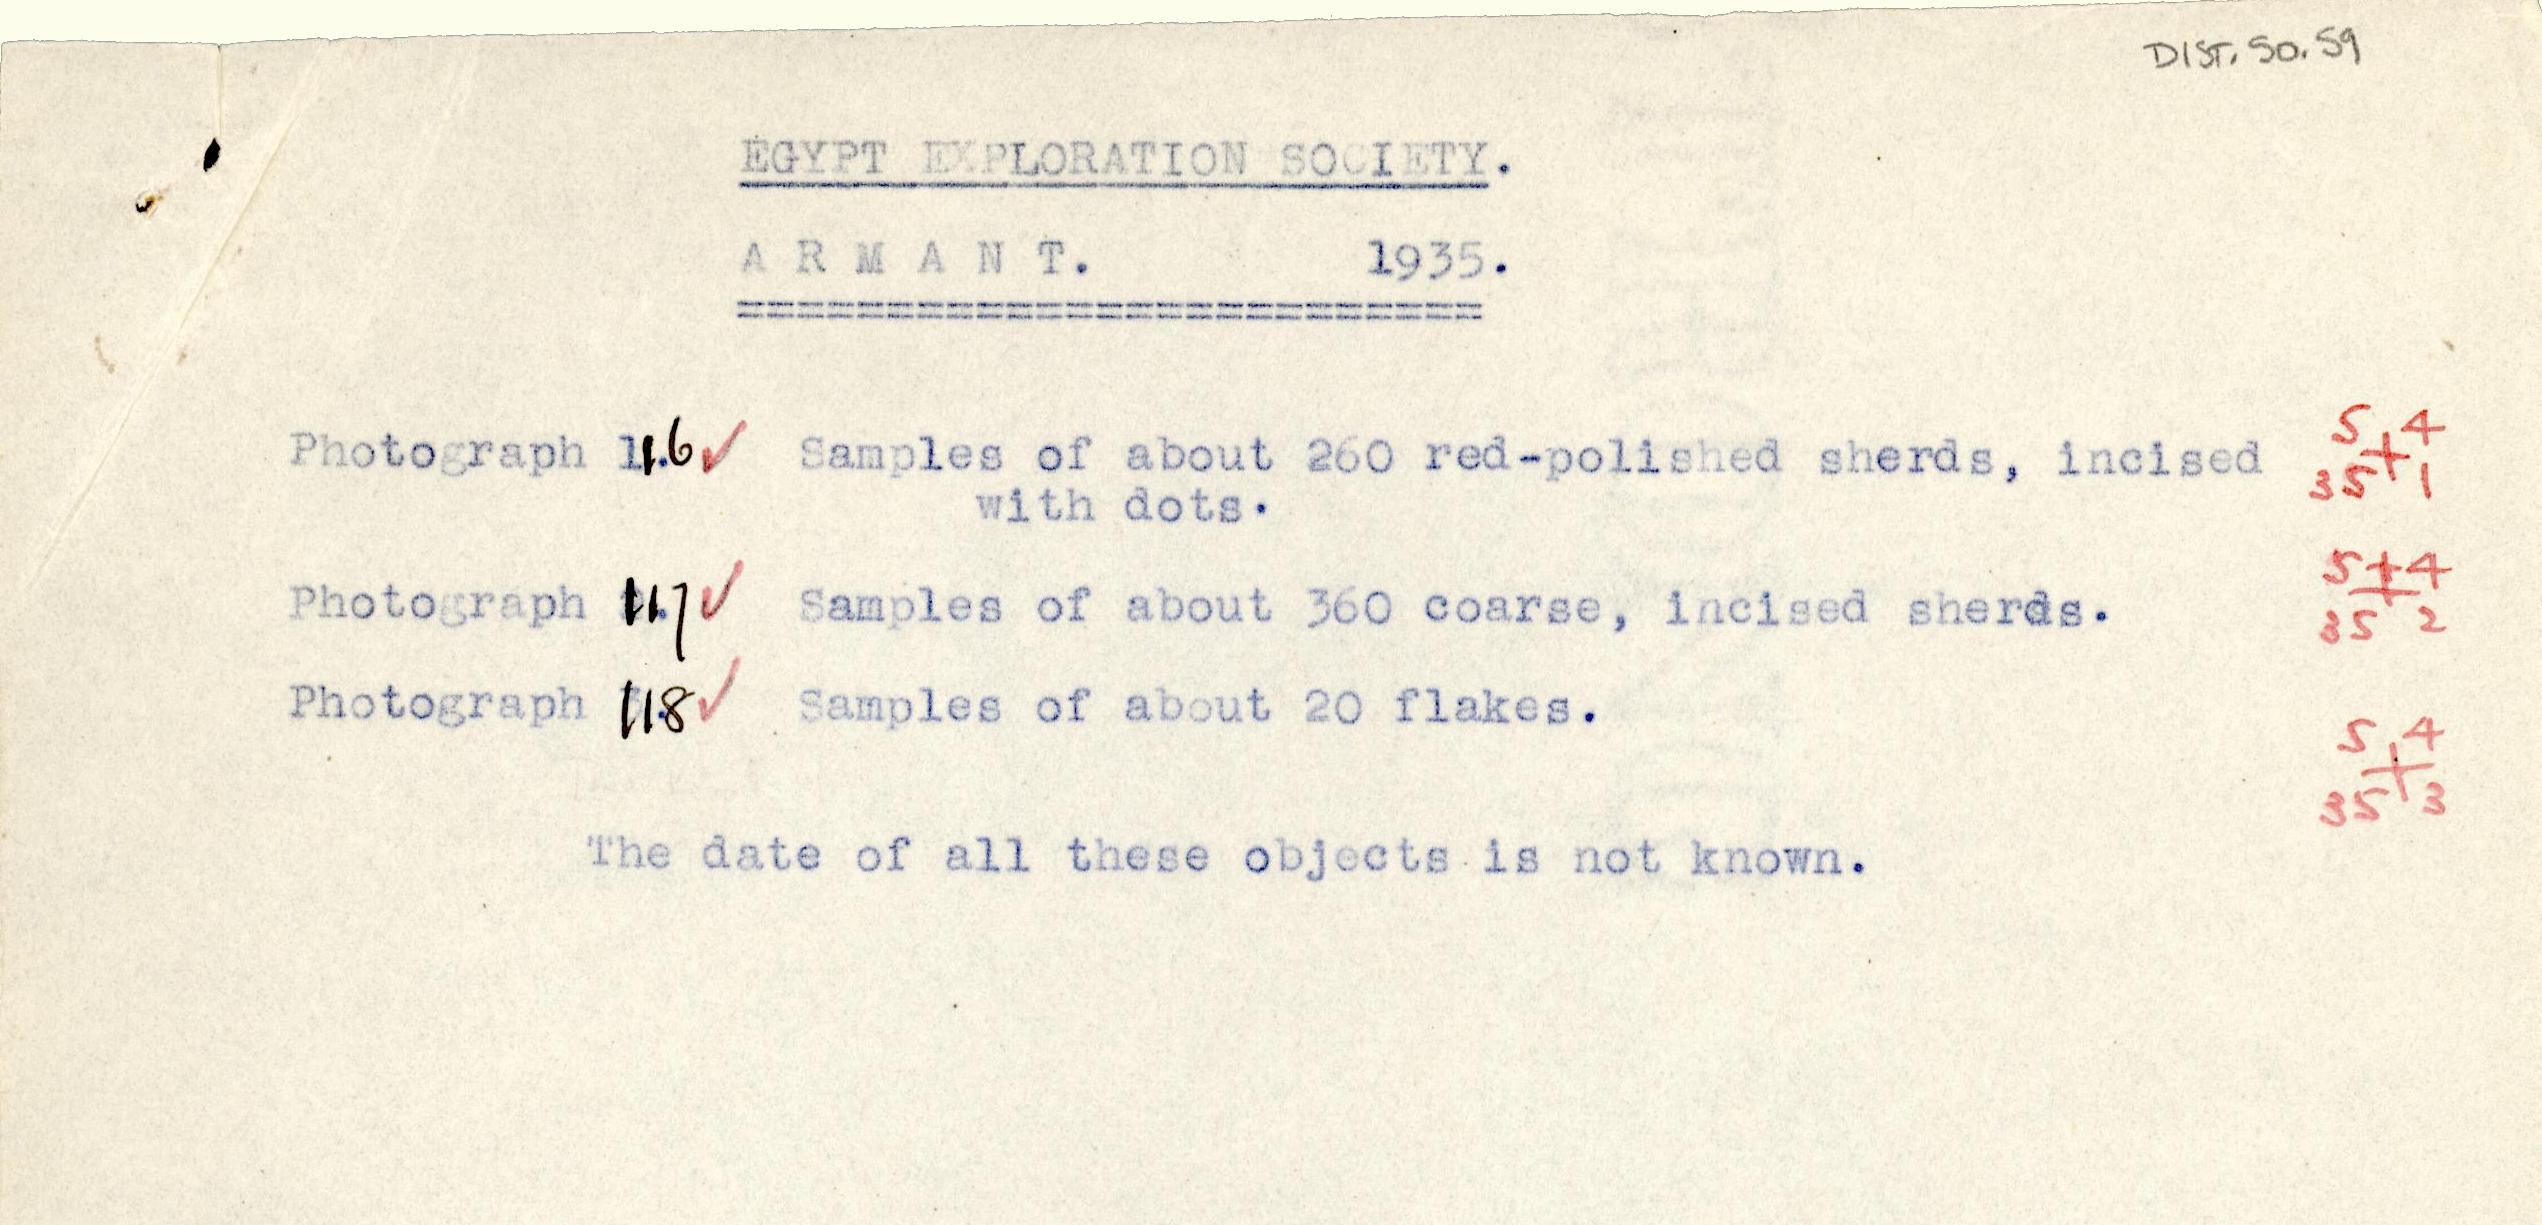 1926-39 correspondence with Antiquities Service DIST.50.59